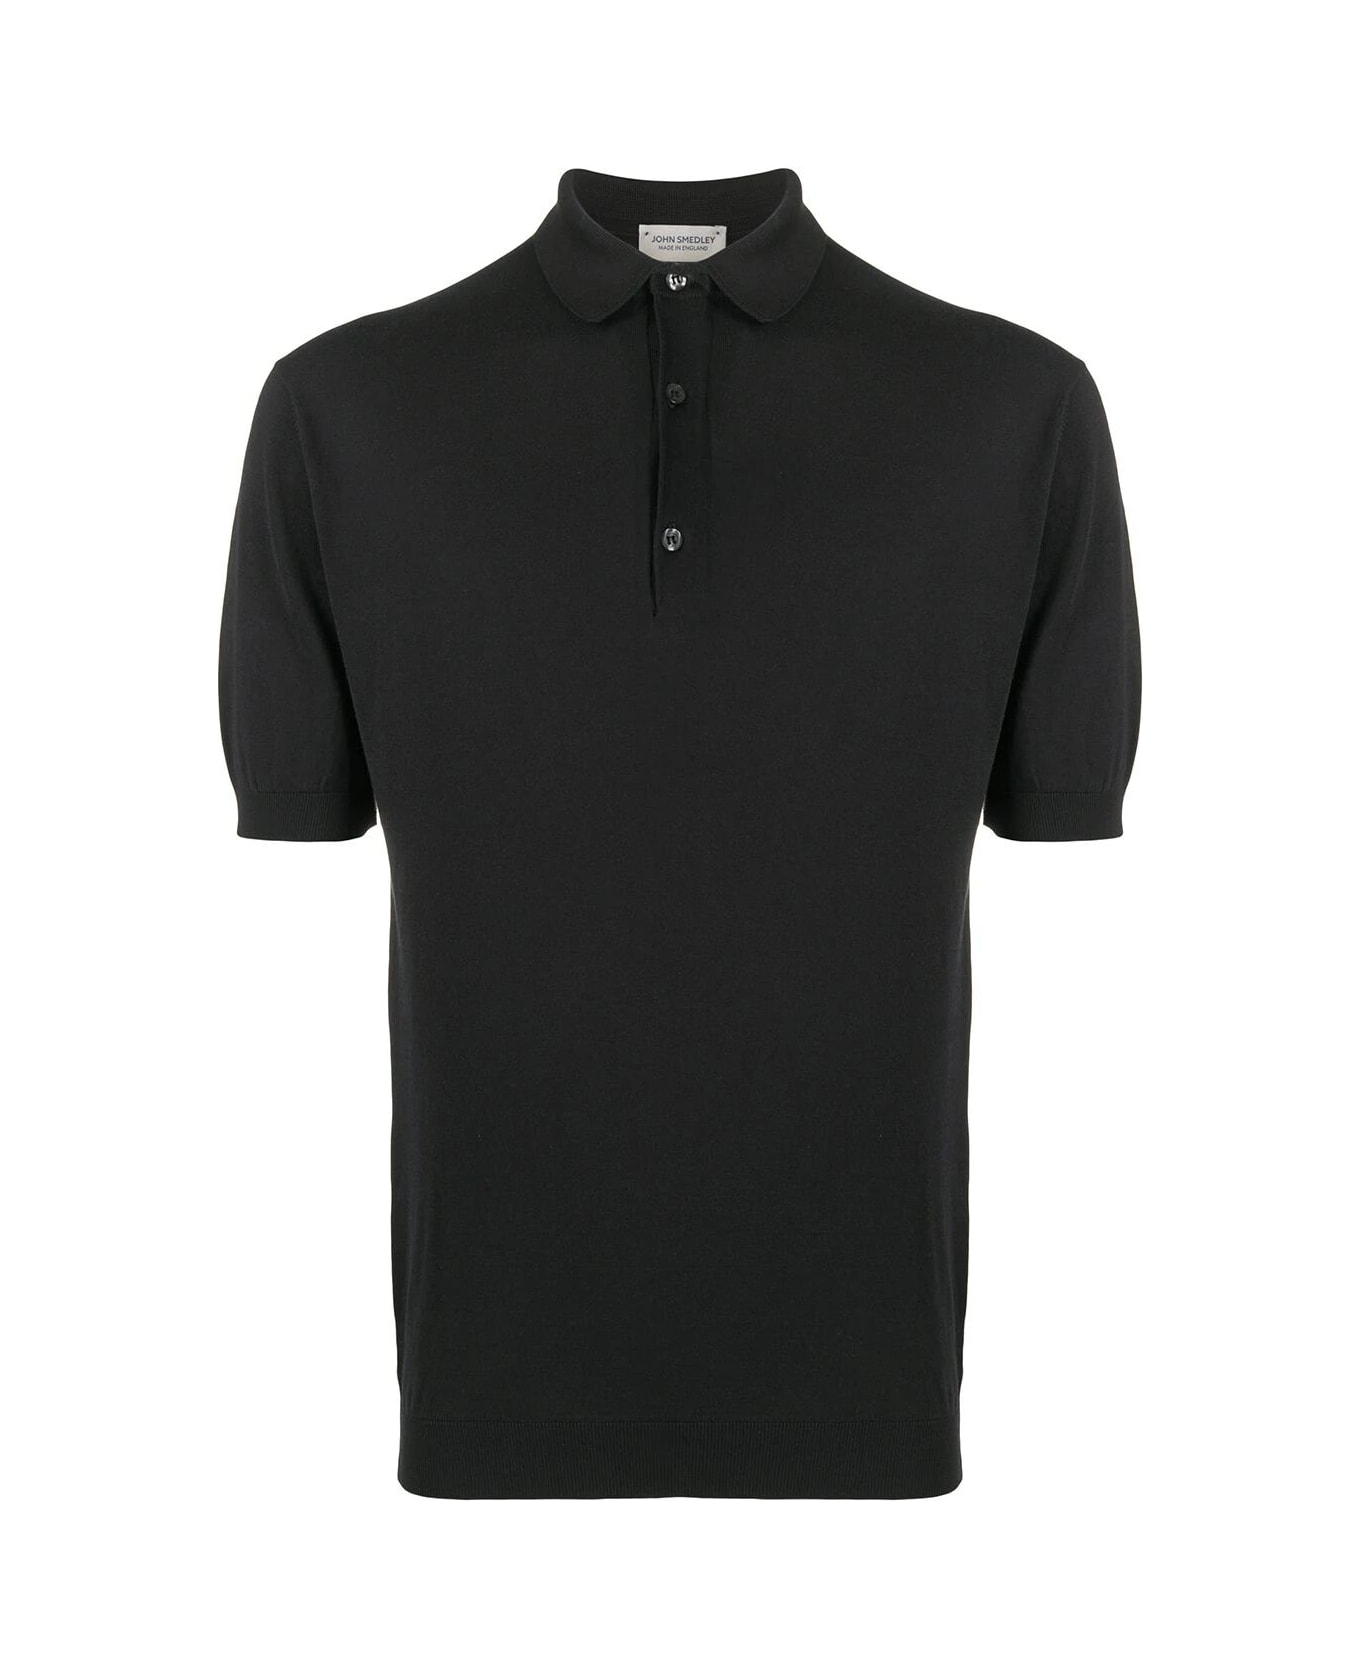 John Smedley Adrian Short Sleeves Shirt - Black シャツ